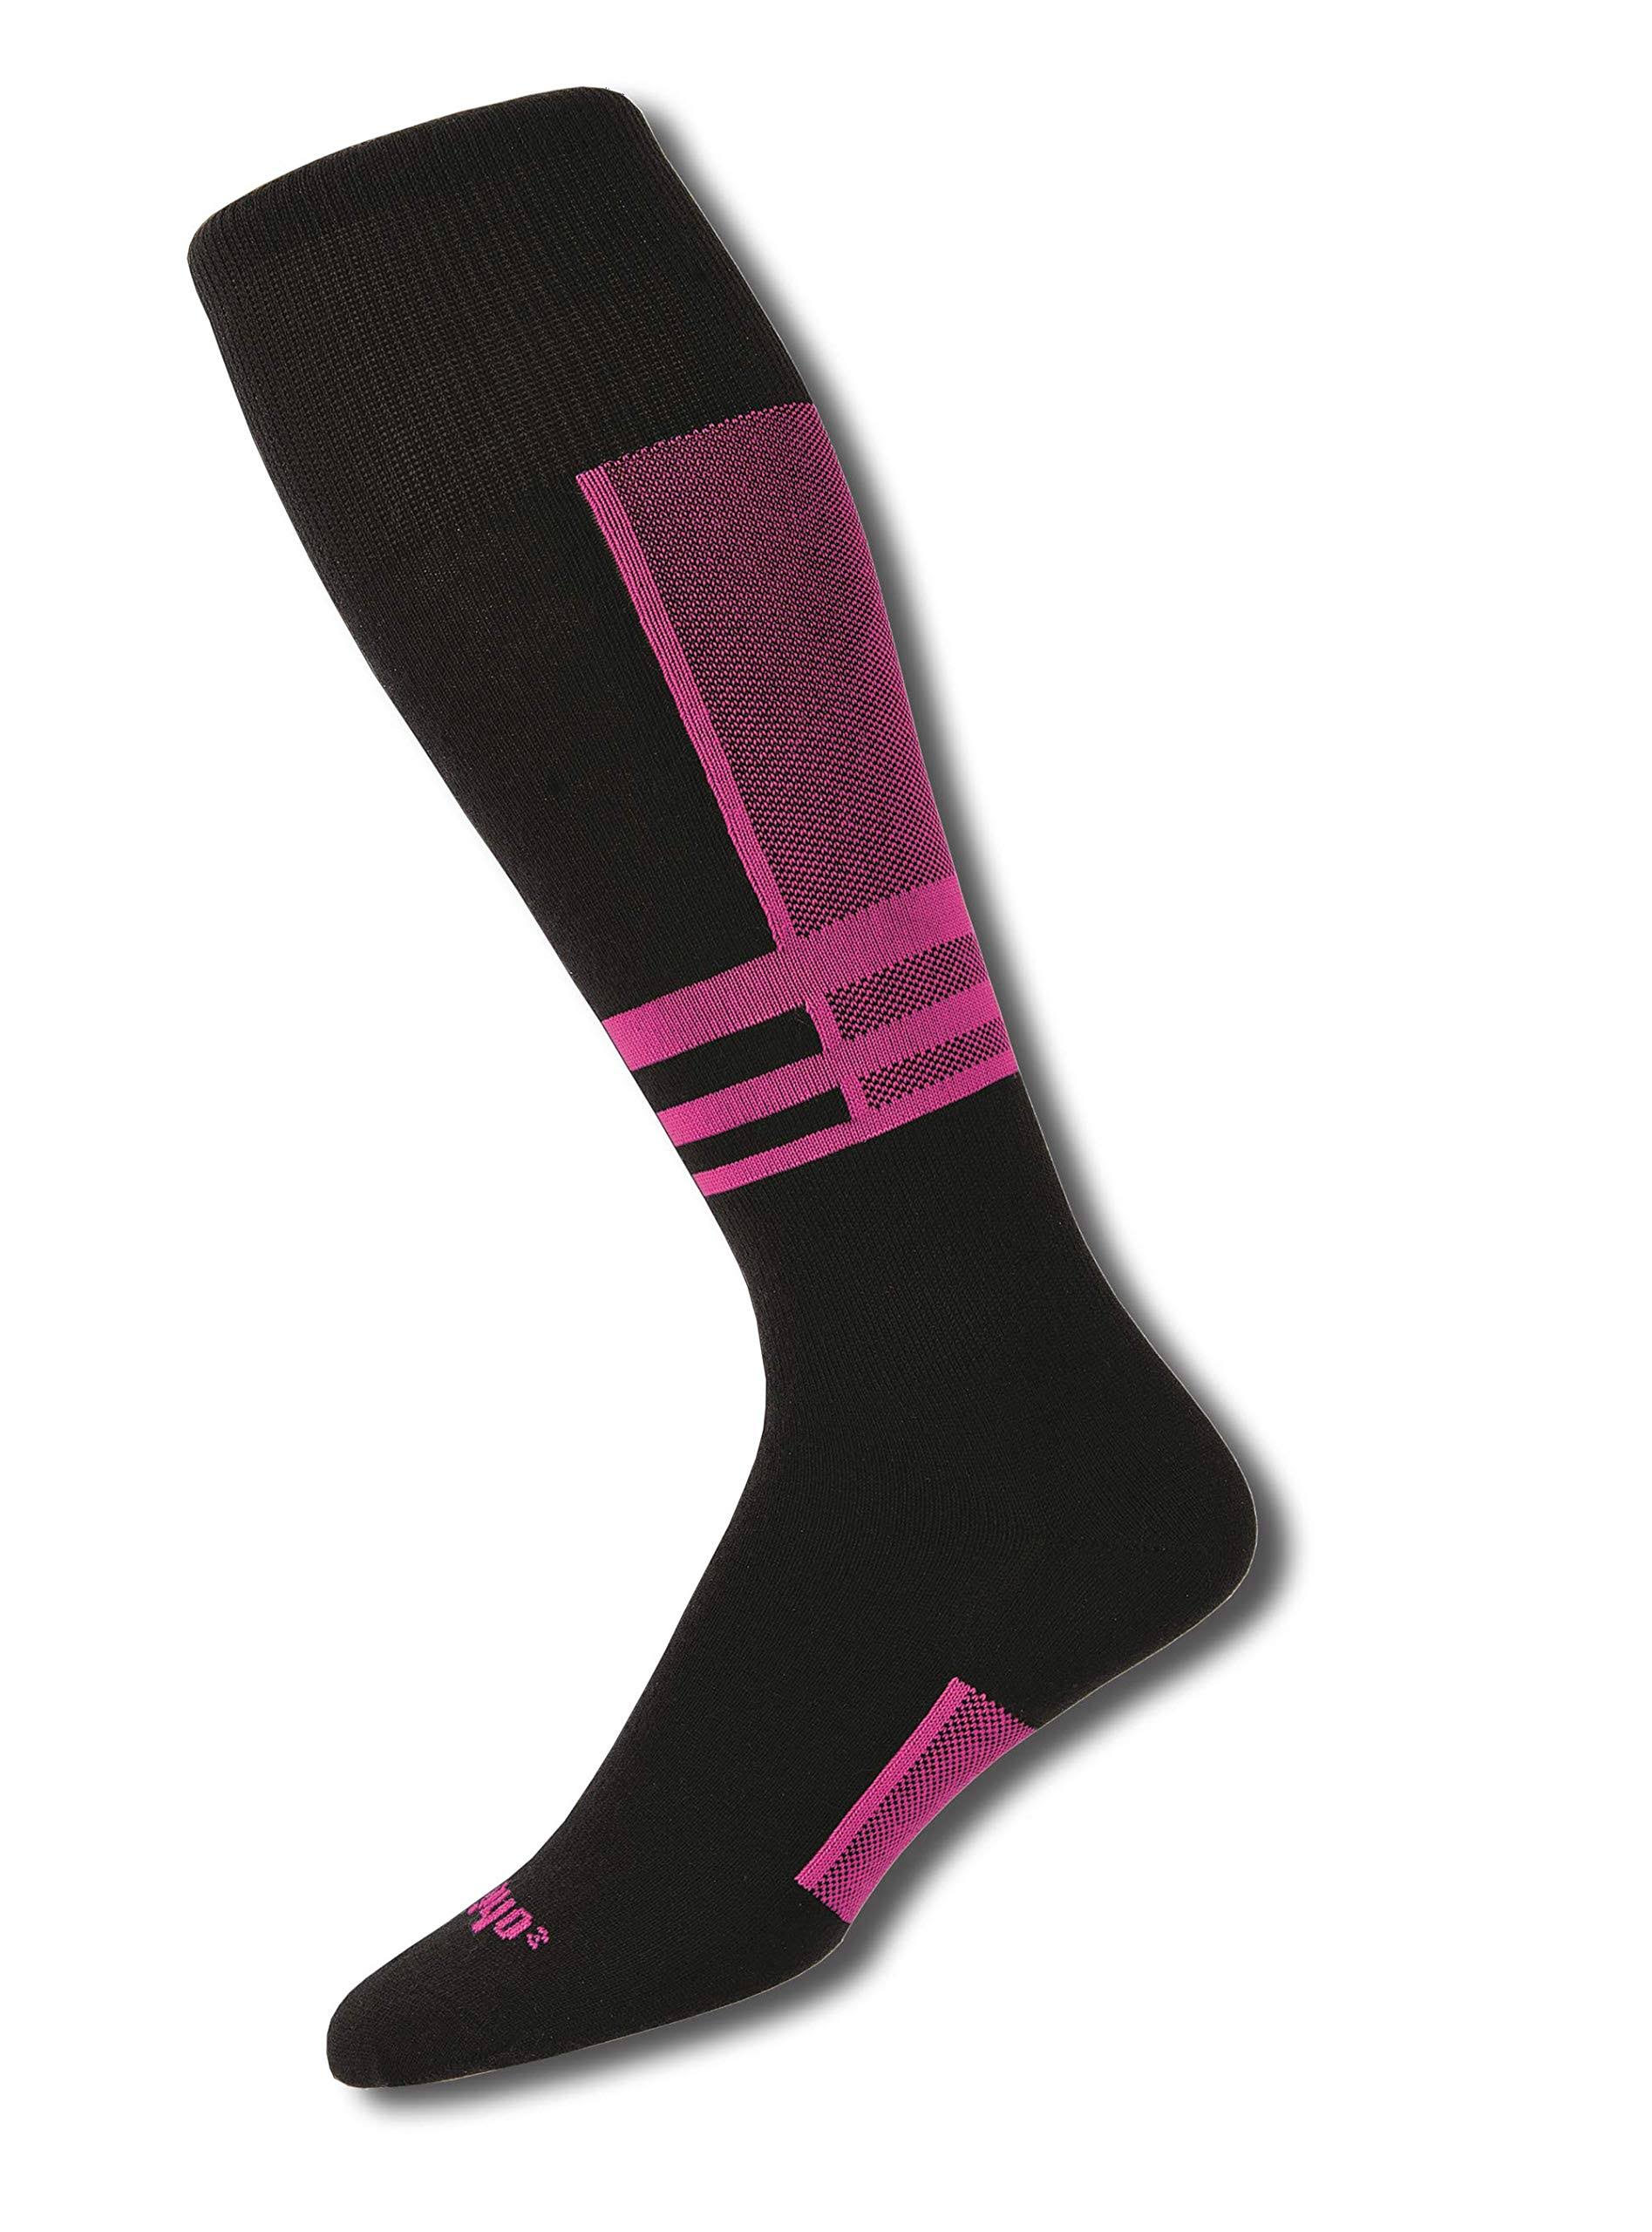 Thorlos Ultra-thin Liner Ski Socks, Medium, Pink